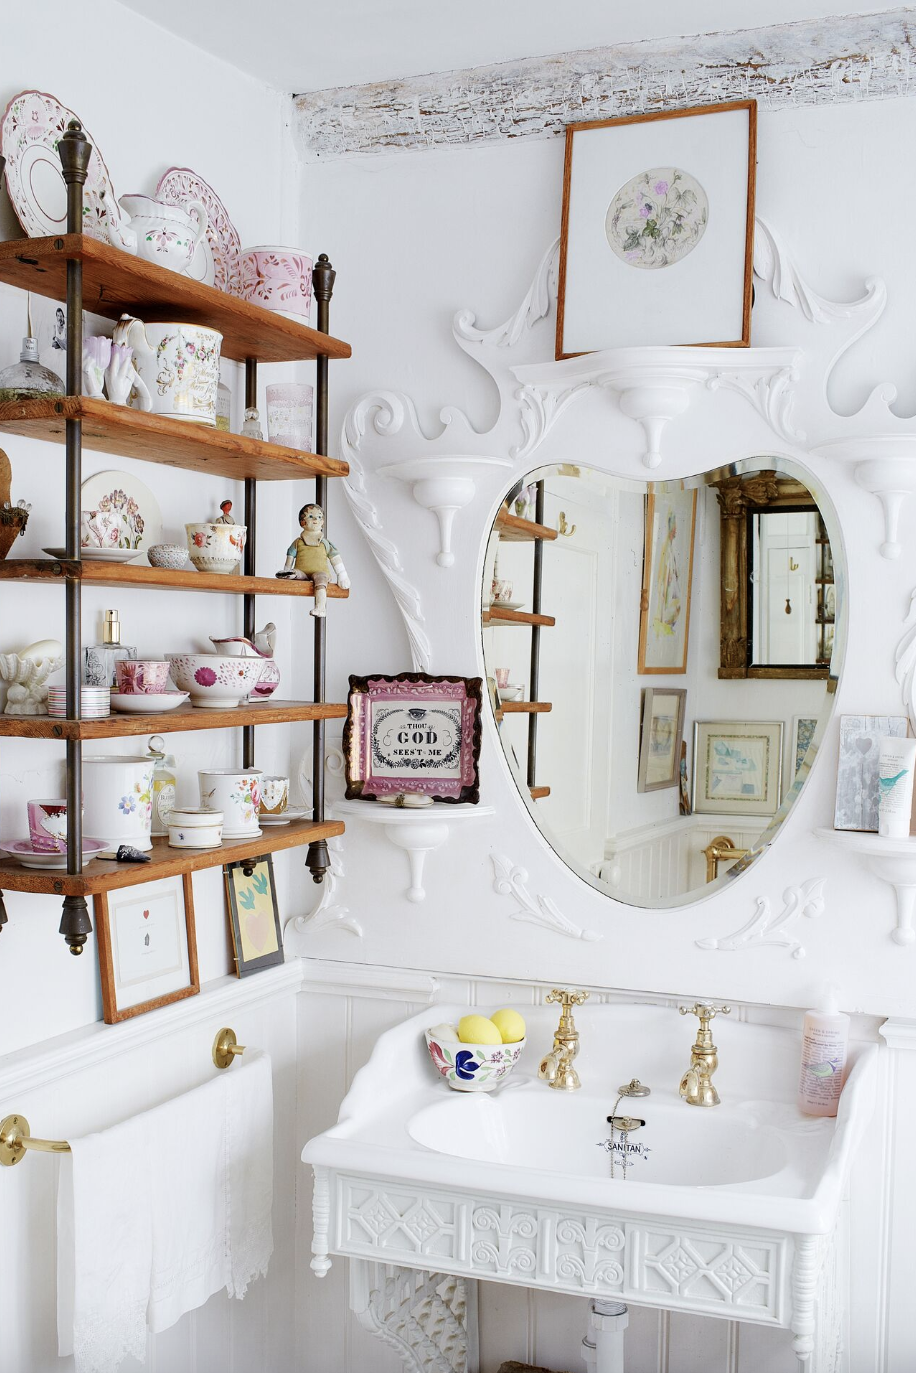 Bathroom shelving ideas: 22 stylish wall storage options